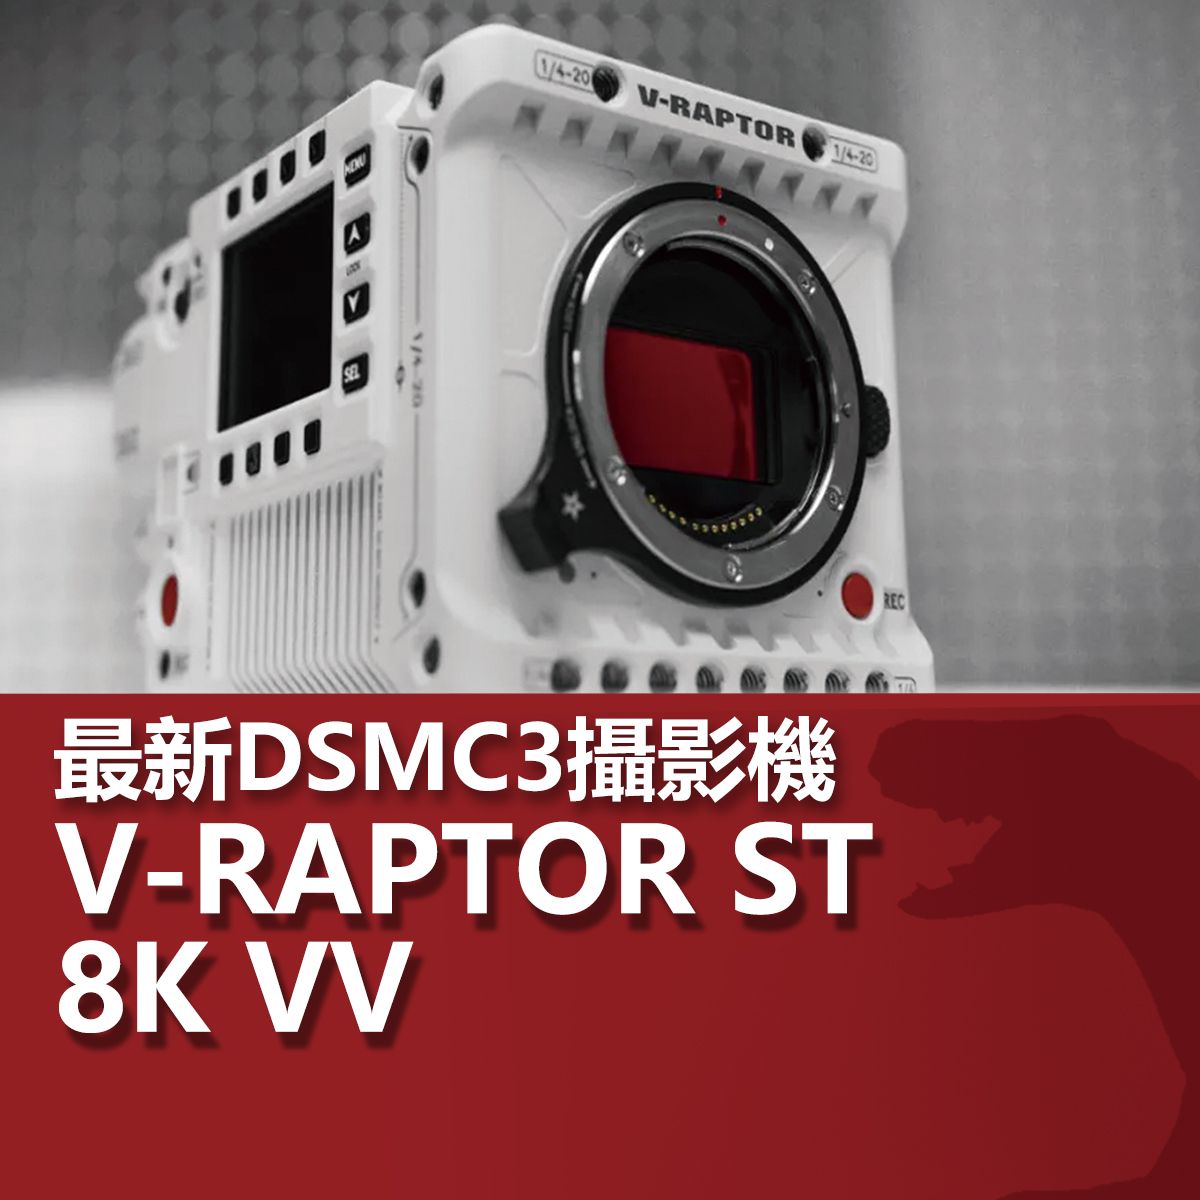 RED DSMC3 V-RAPTOR ST 8K VV